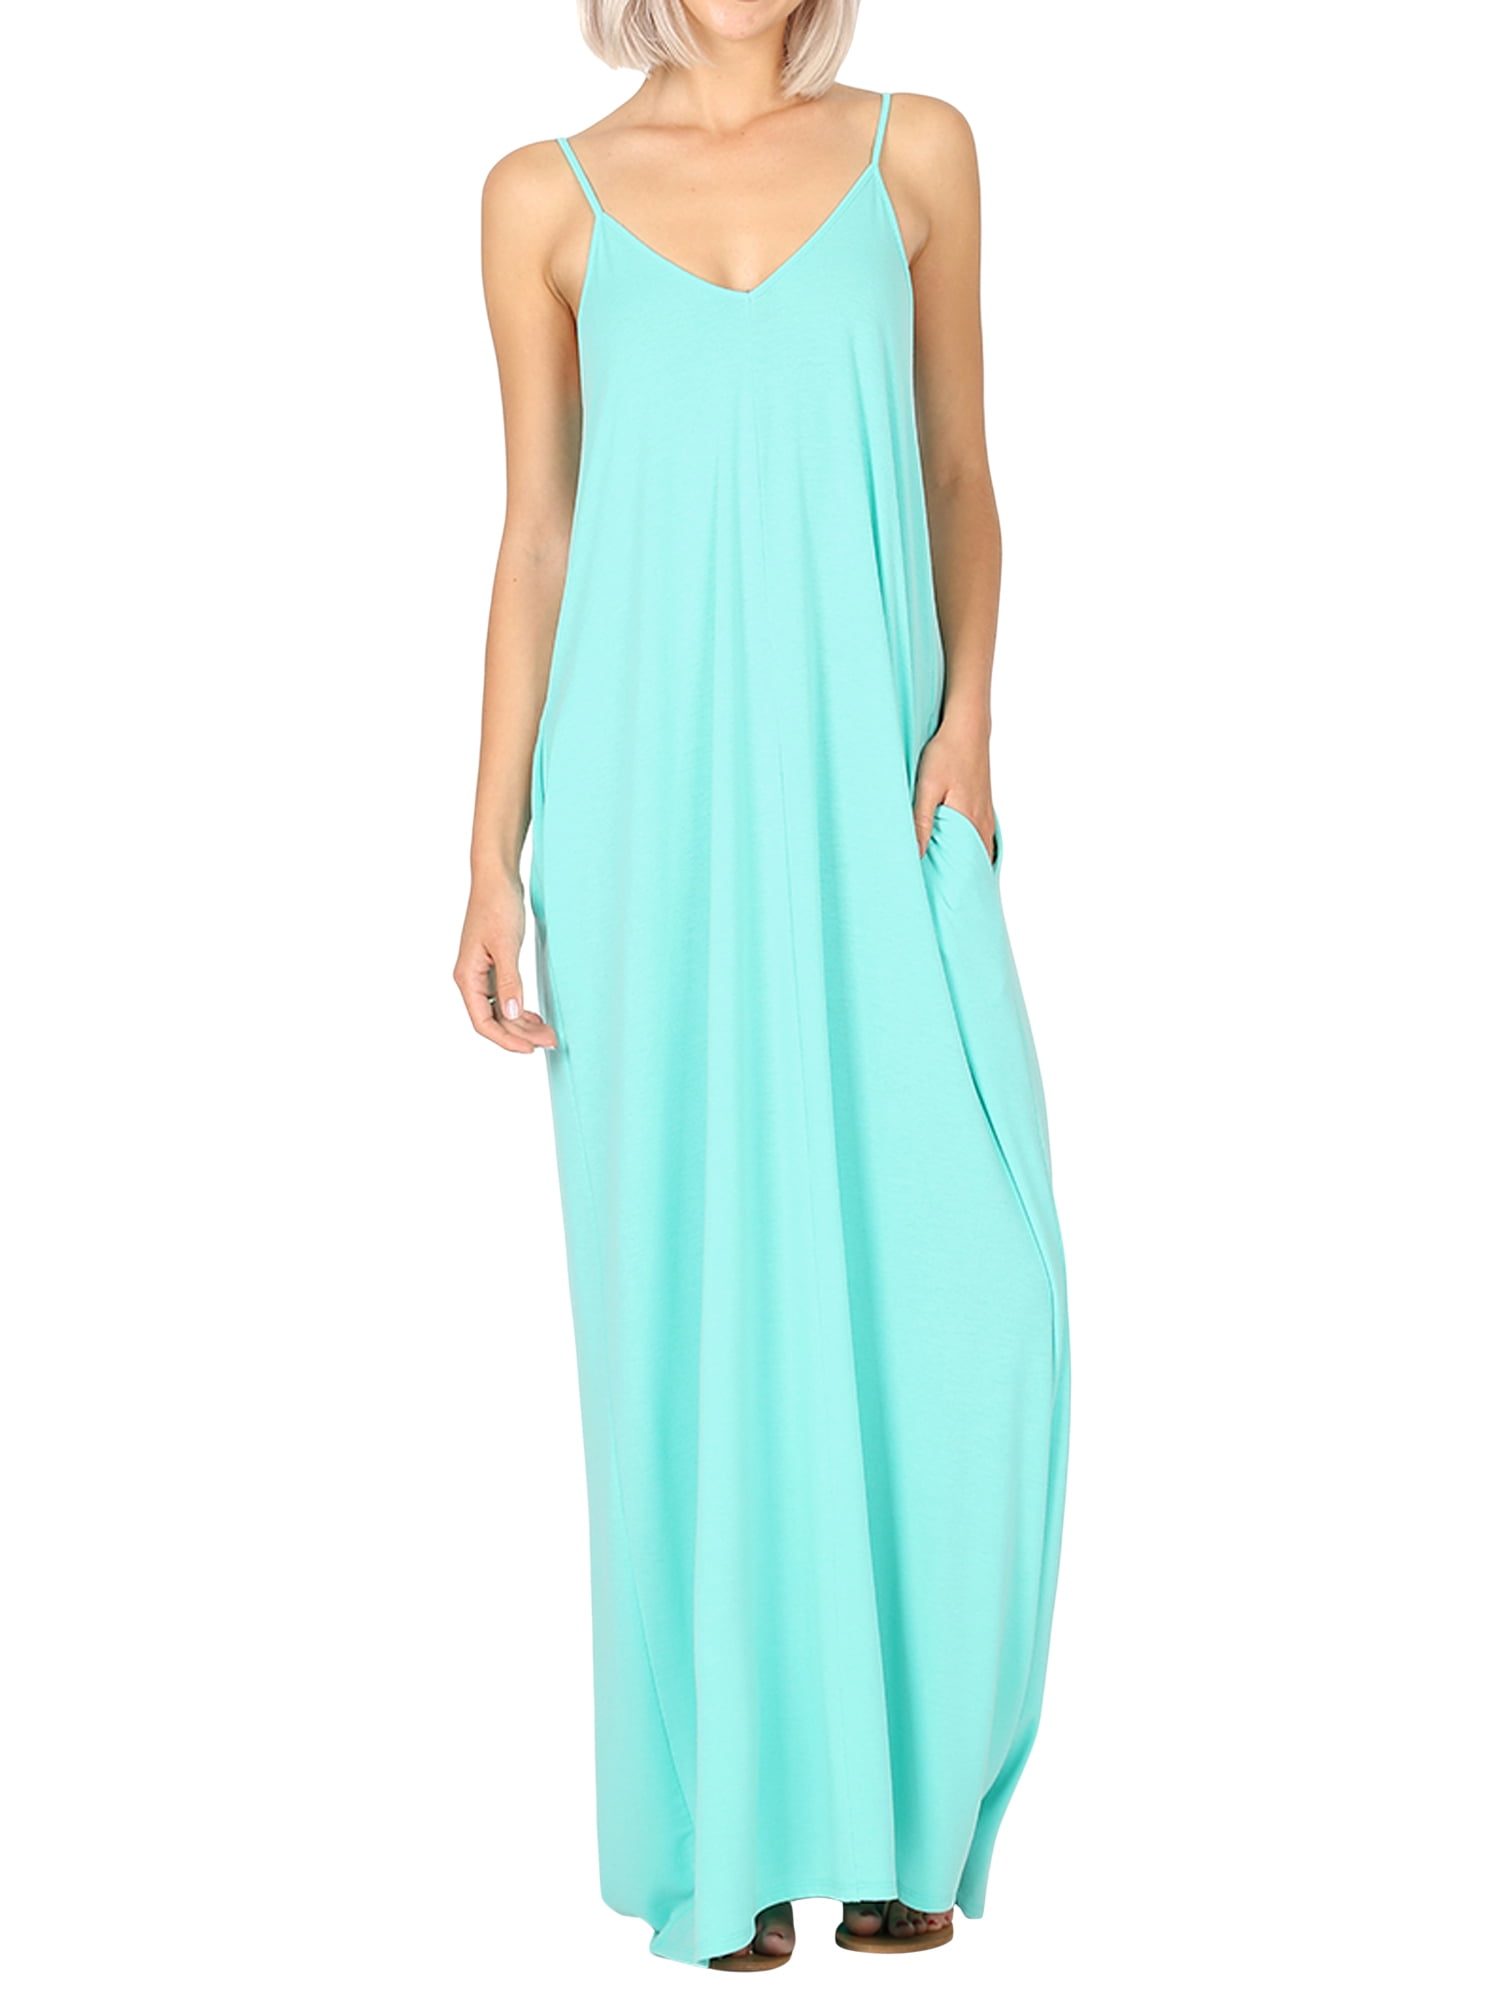 Ladies Splash Blue Coral Cami Long Summer Flared Beach Dress Top Vest Plus Size 